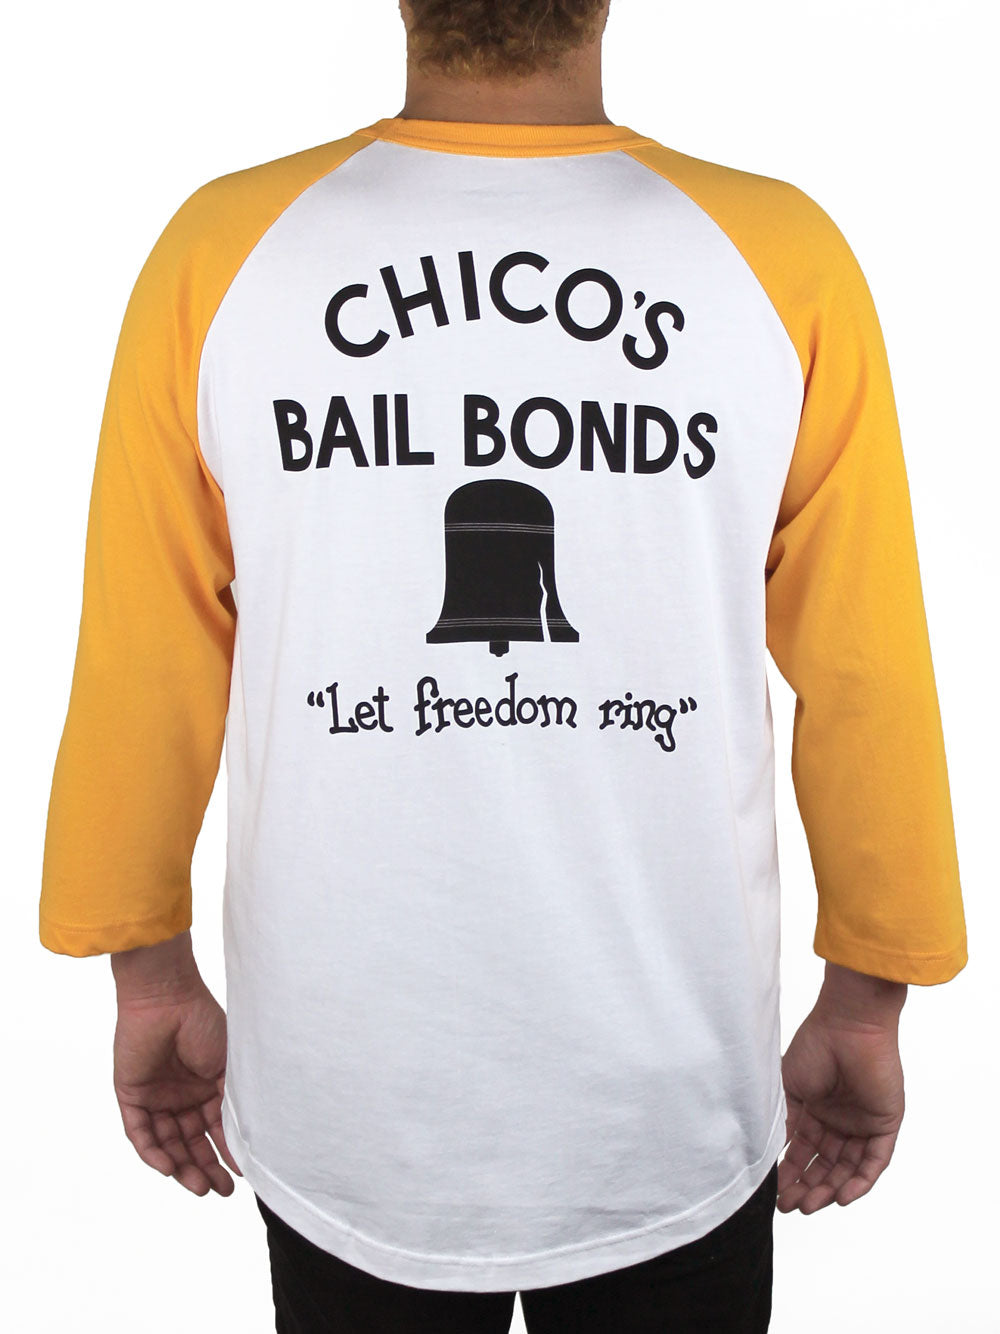 Chico's Bail Bonds Shirt